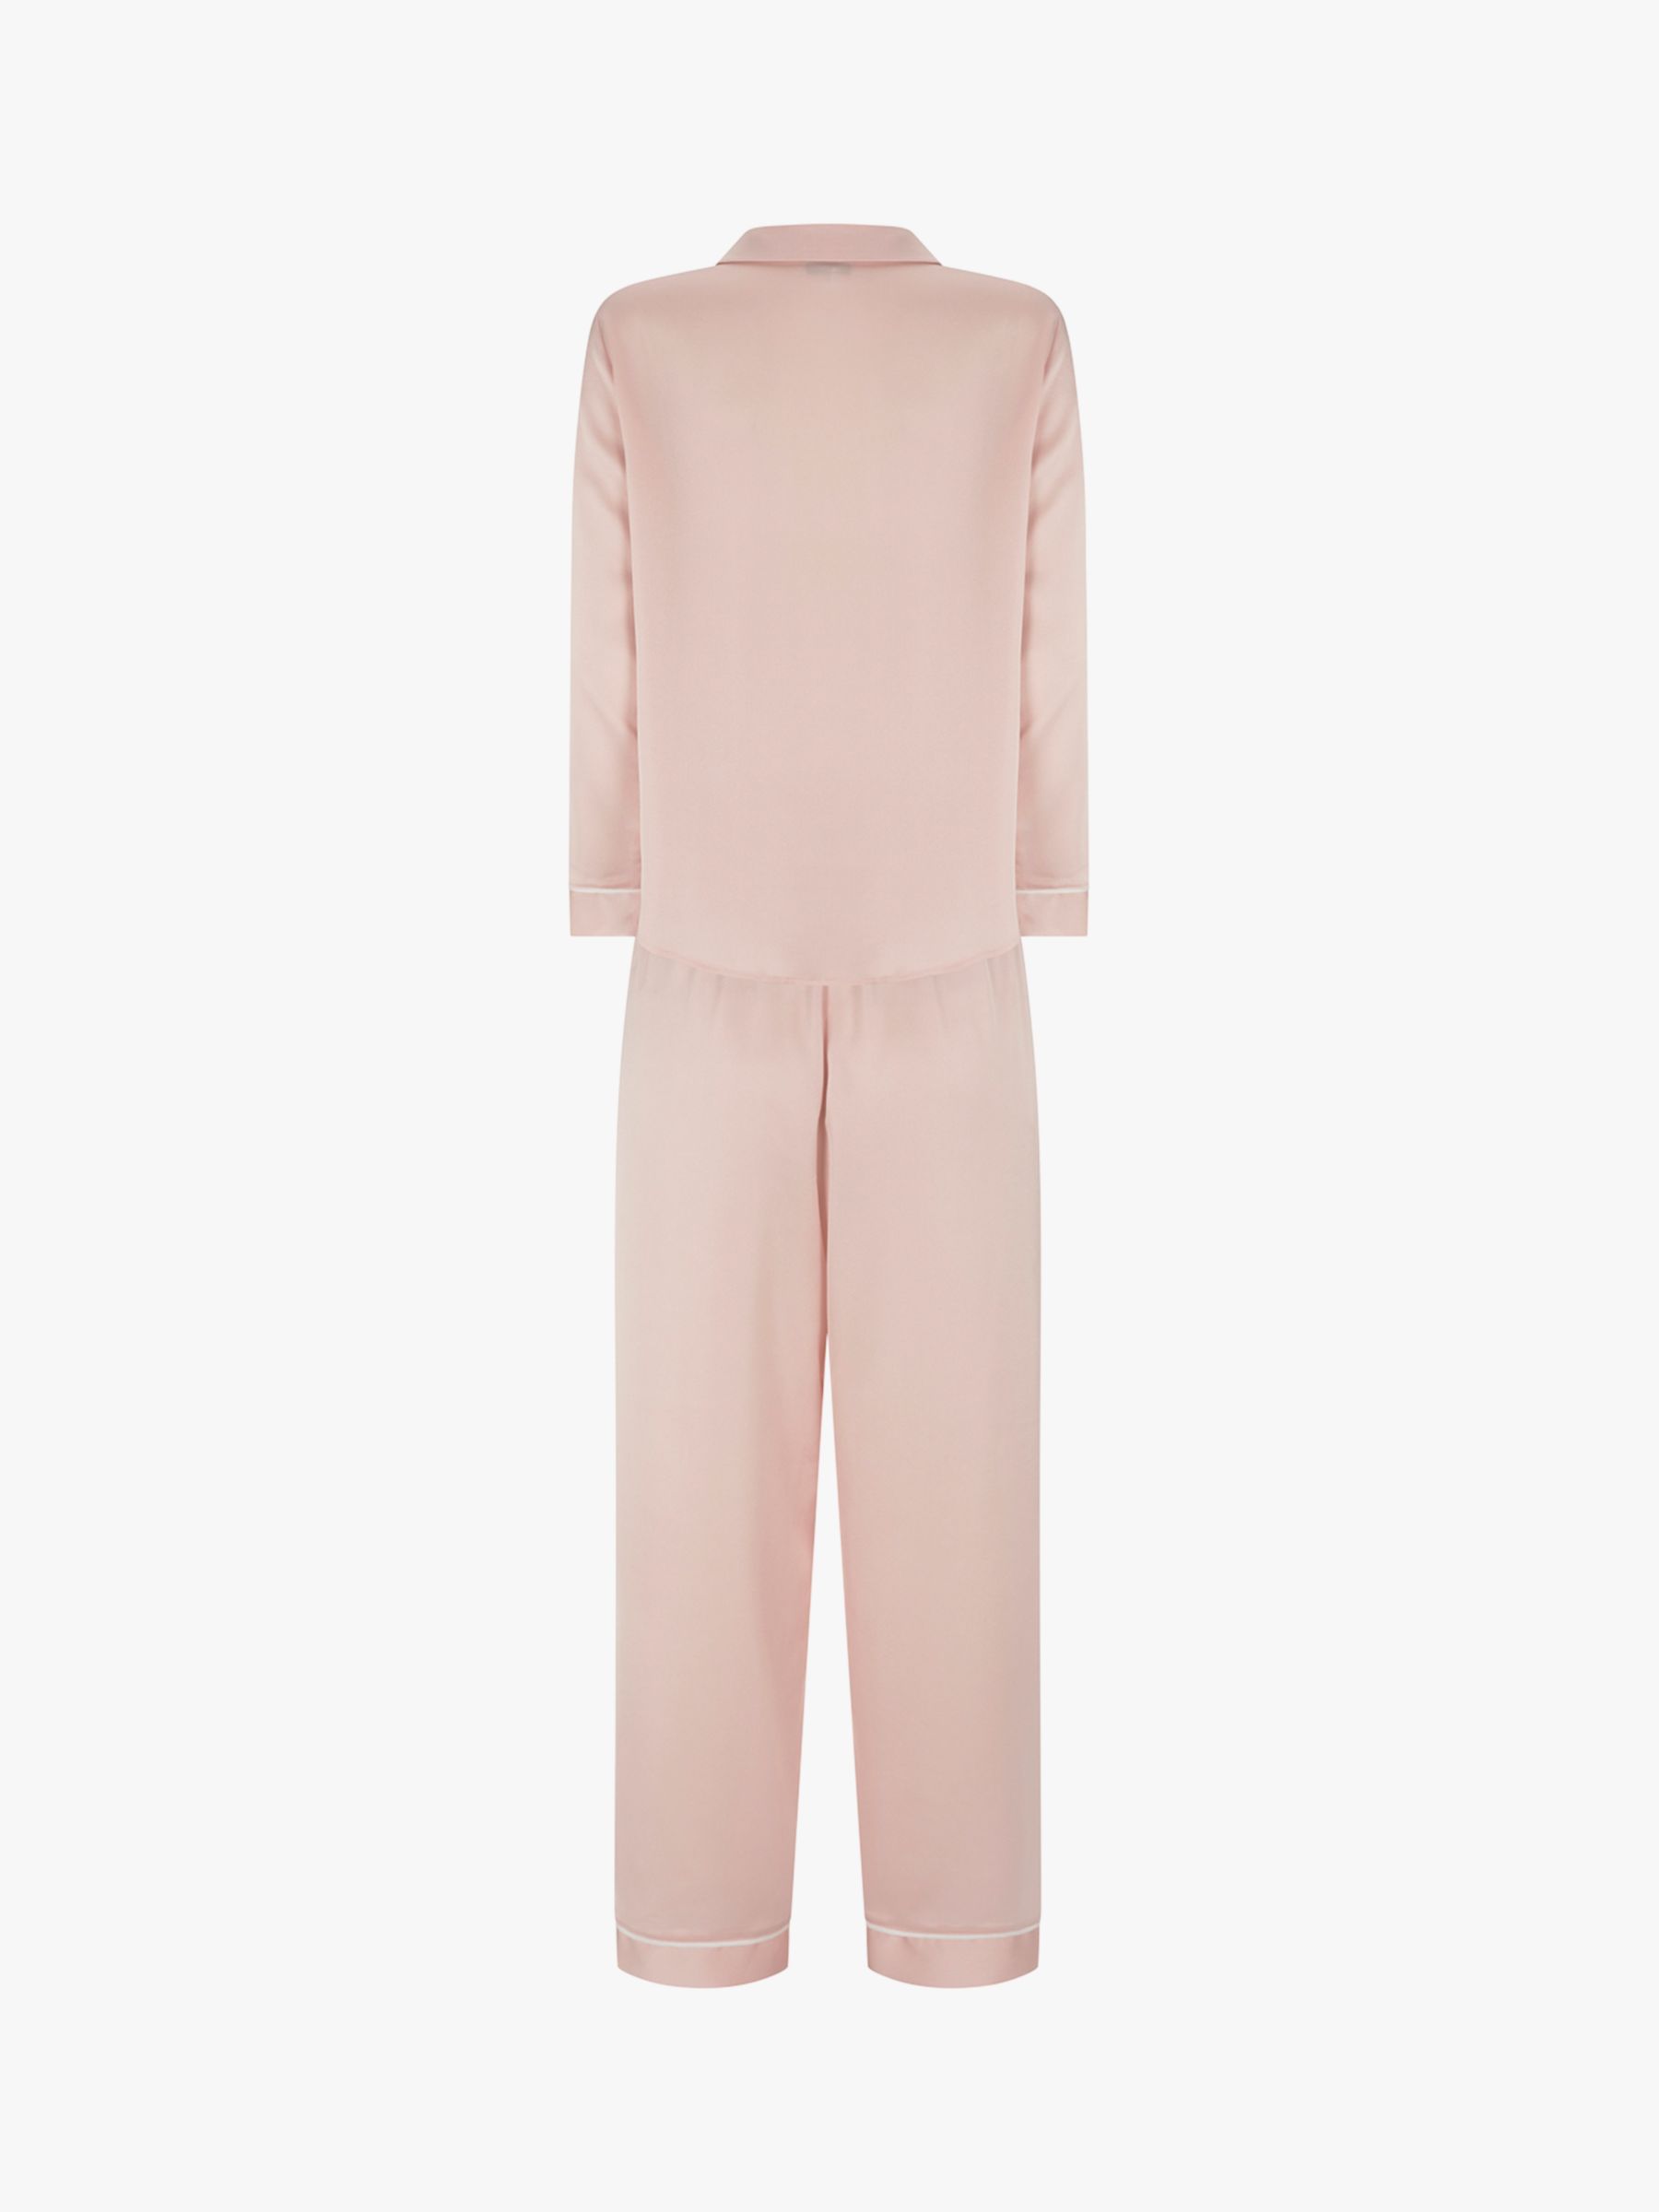 Hygge by Mint Velvet Classic Satin Pyjama Set, Blush